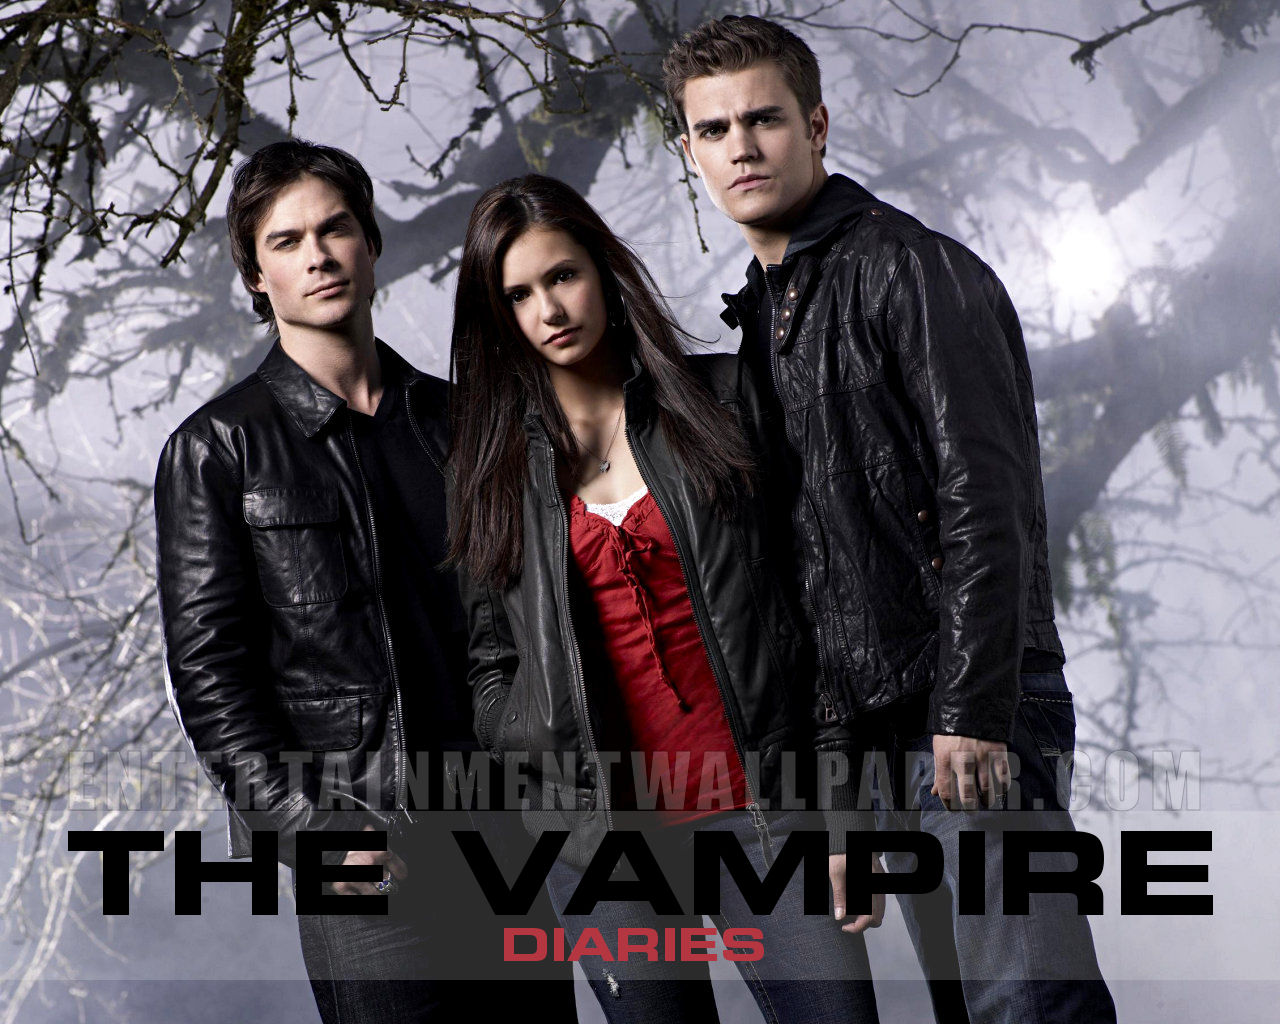 The Vampire Diaries Season 1 Episode 2 The Night of the Comet - How Many Episodes In The Vampire Diaries Season 1